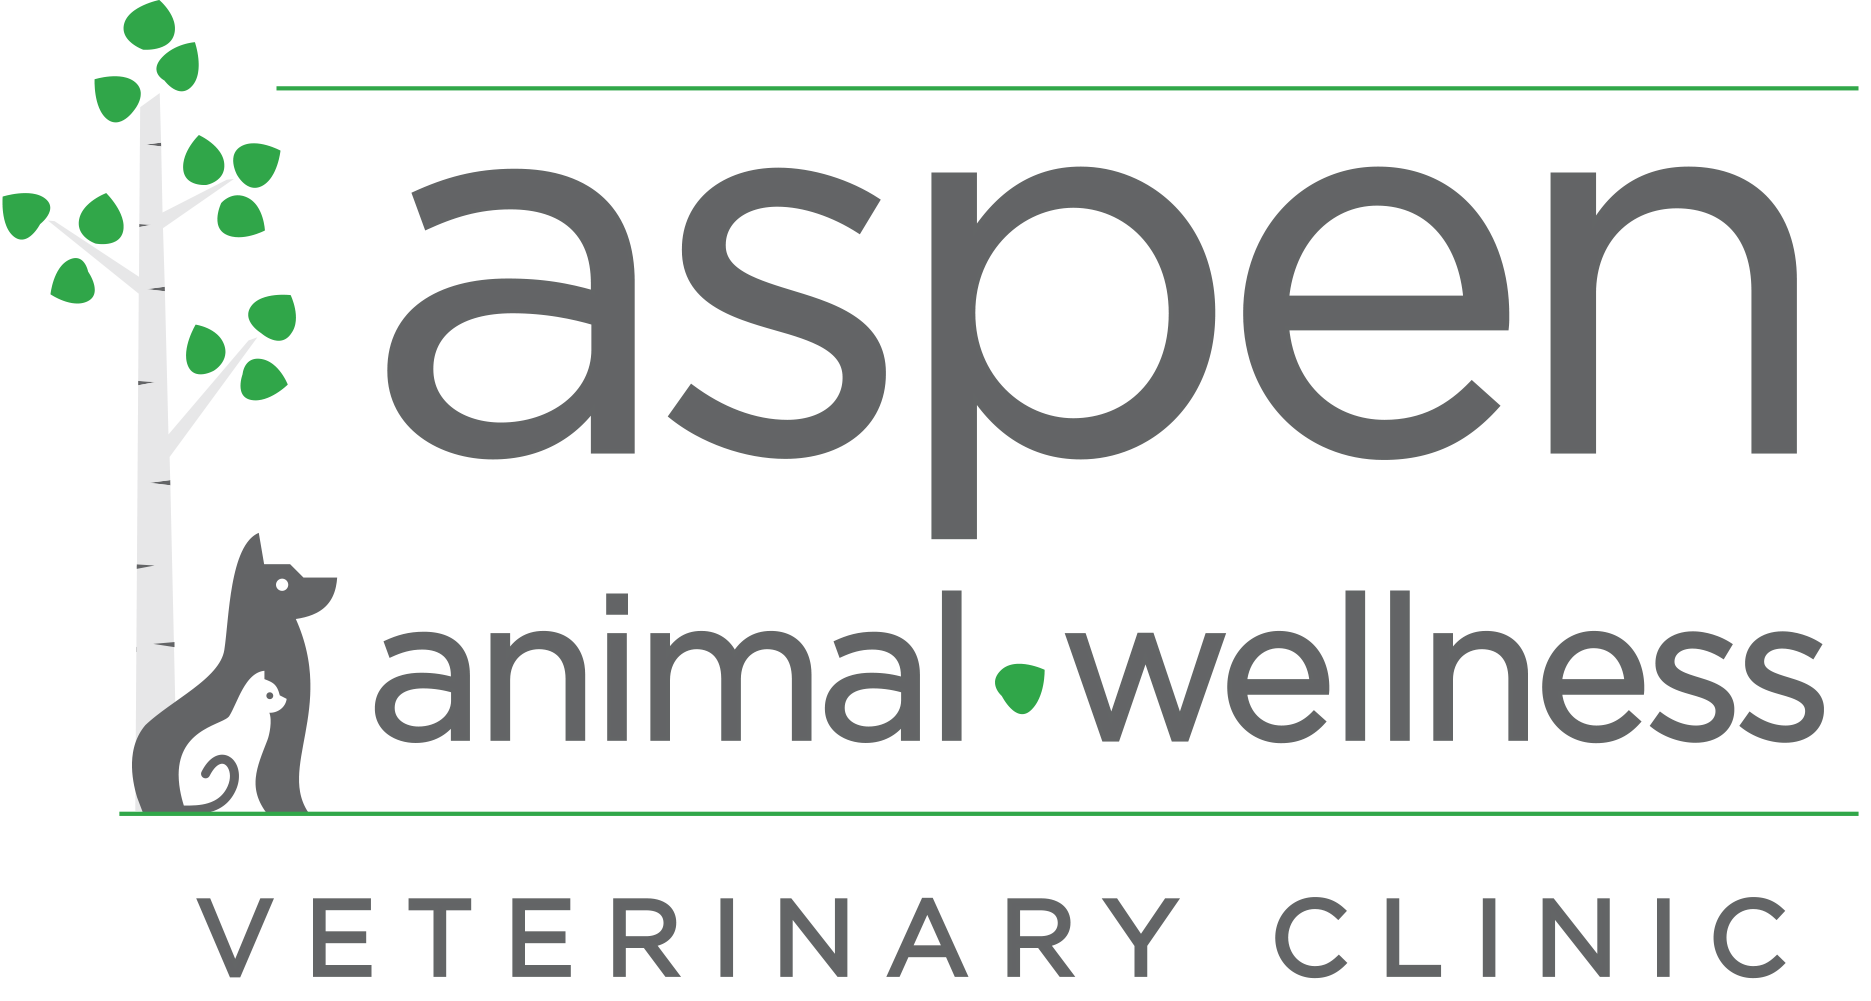 Pet wellness veterinary clinic